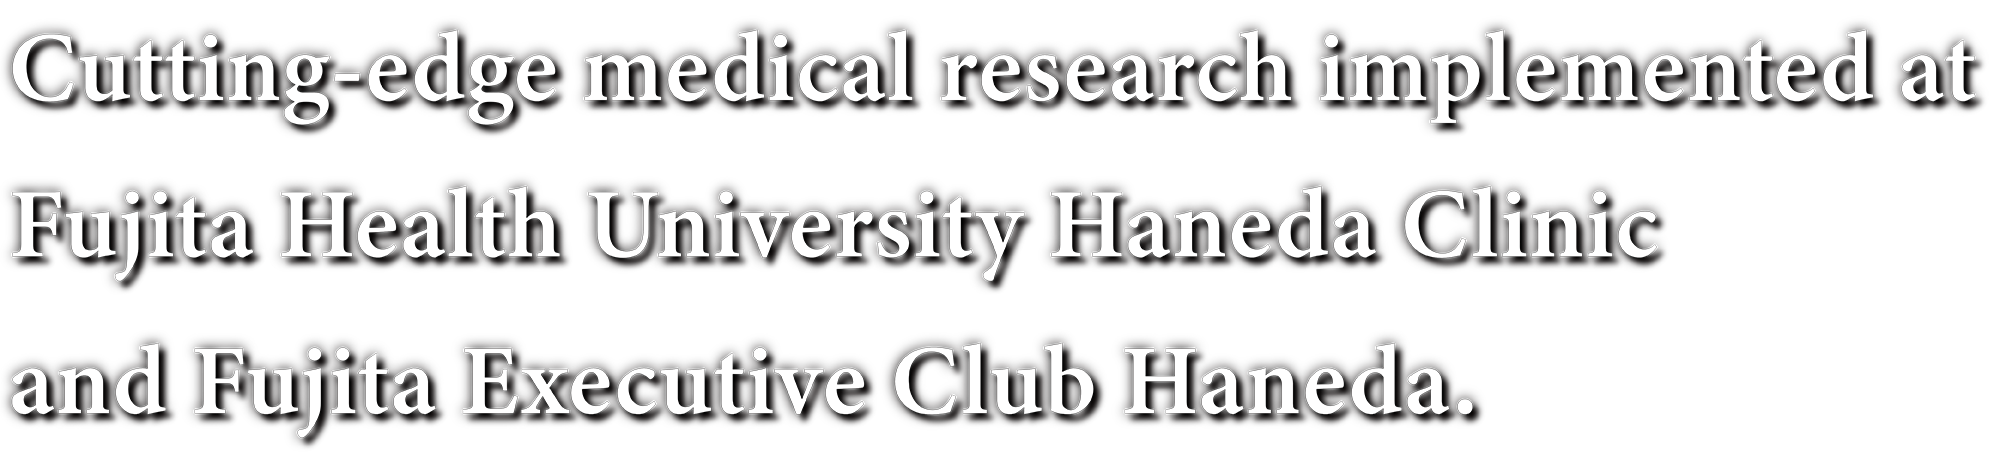 Cutting-edge medical research implemented at Fujita Health University Haneda Clinic and Fujita Executive Club Haneda.